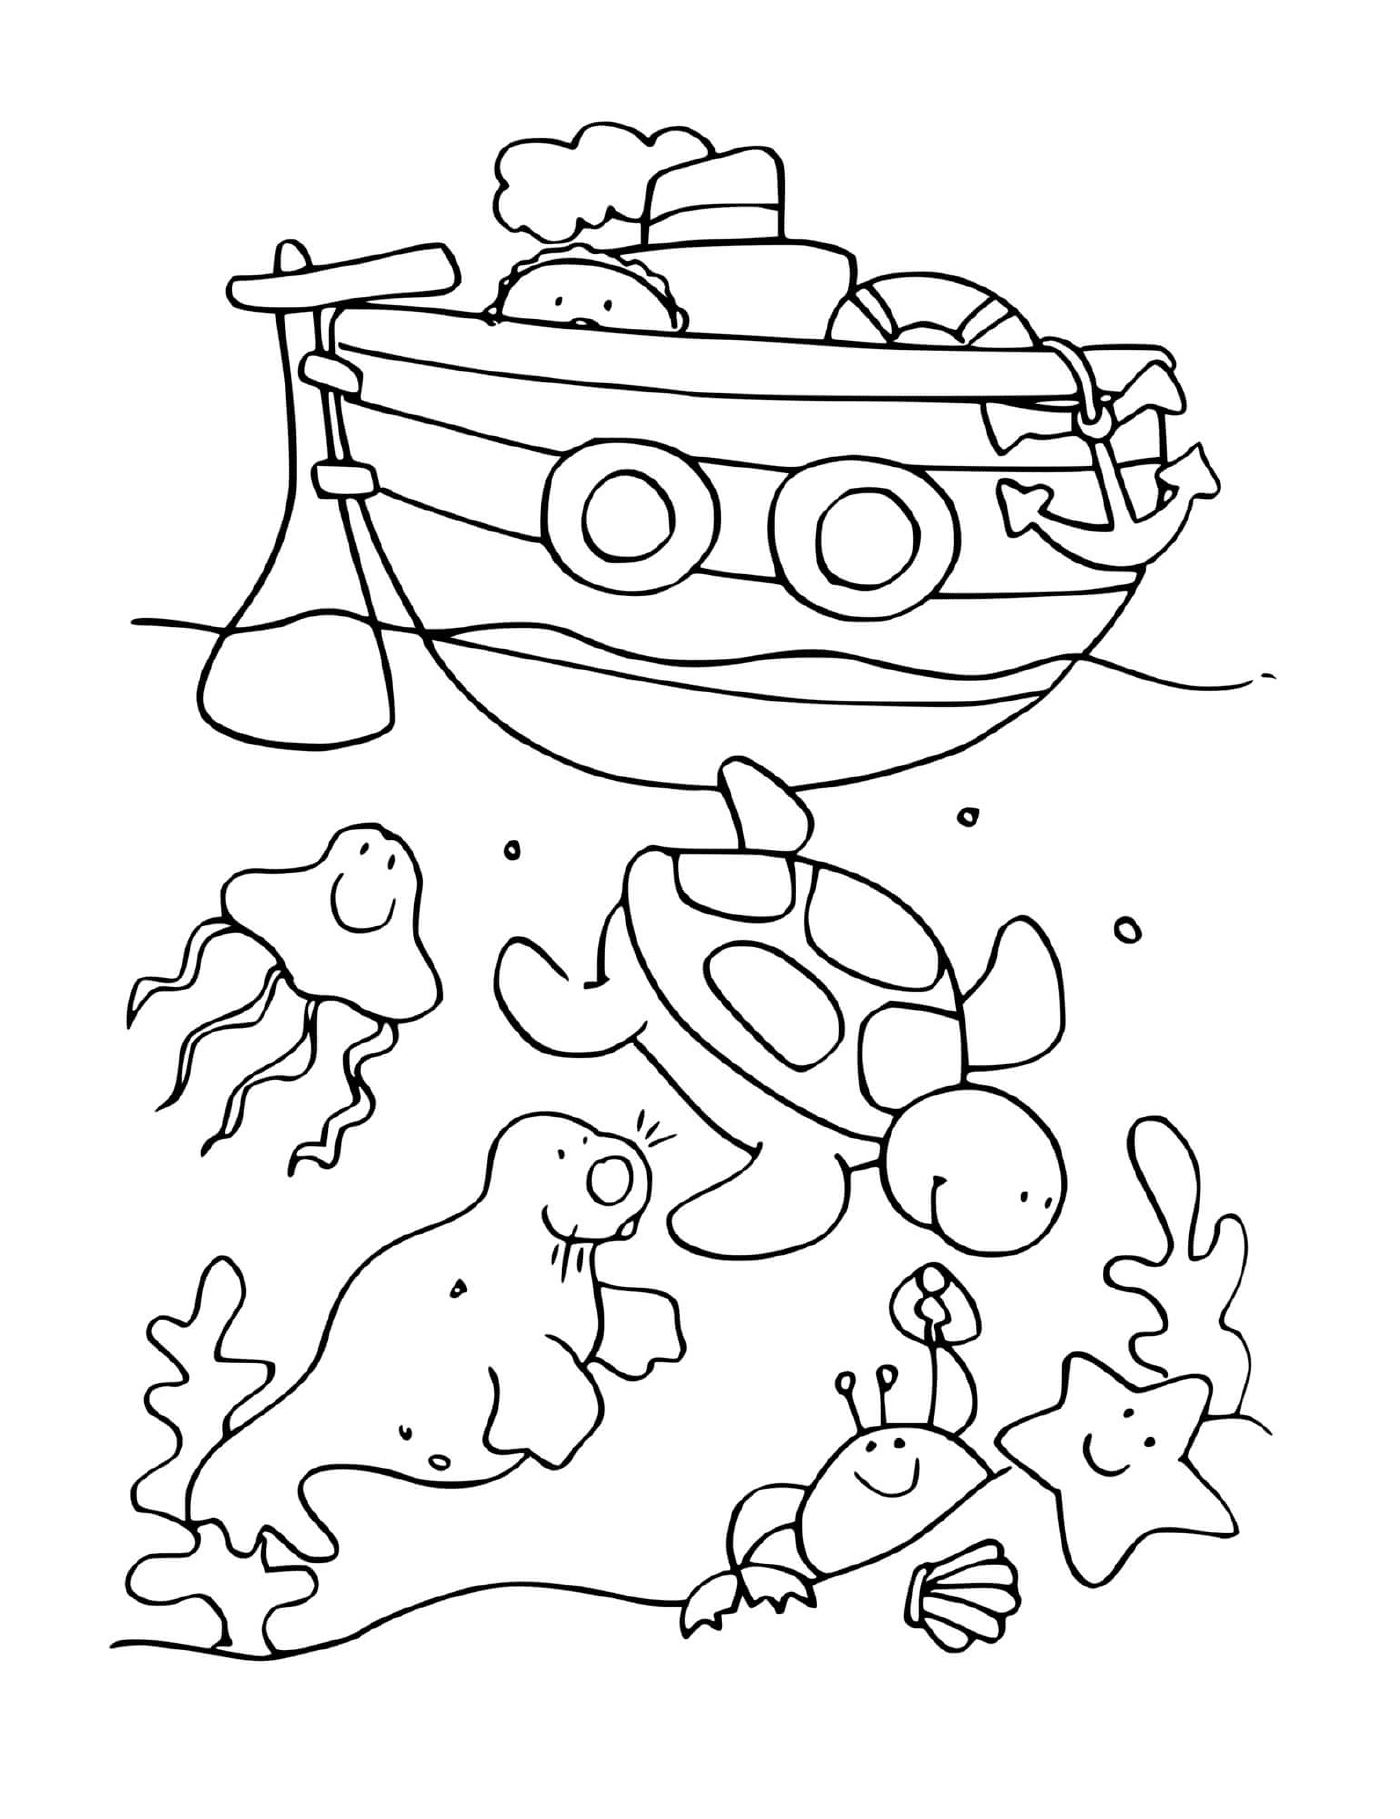  Boote und Meerestiere im Meeresboden 